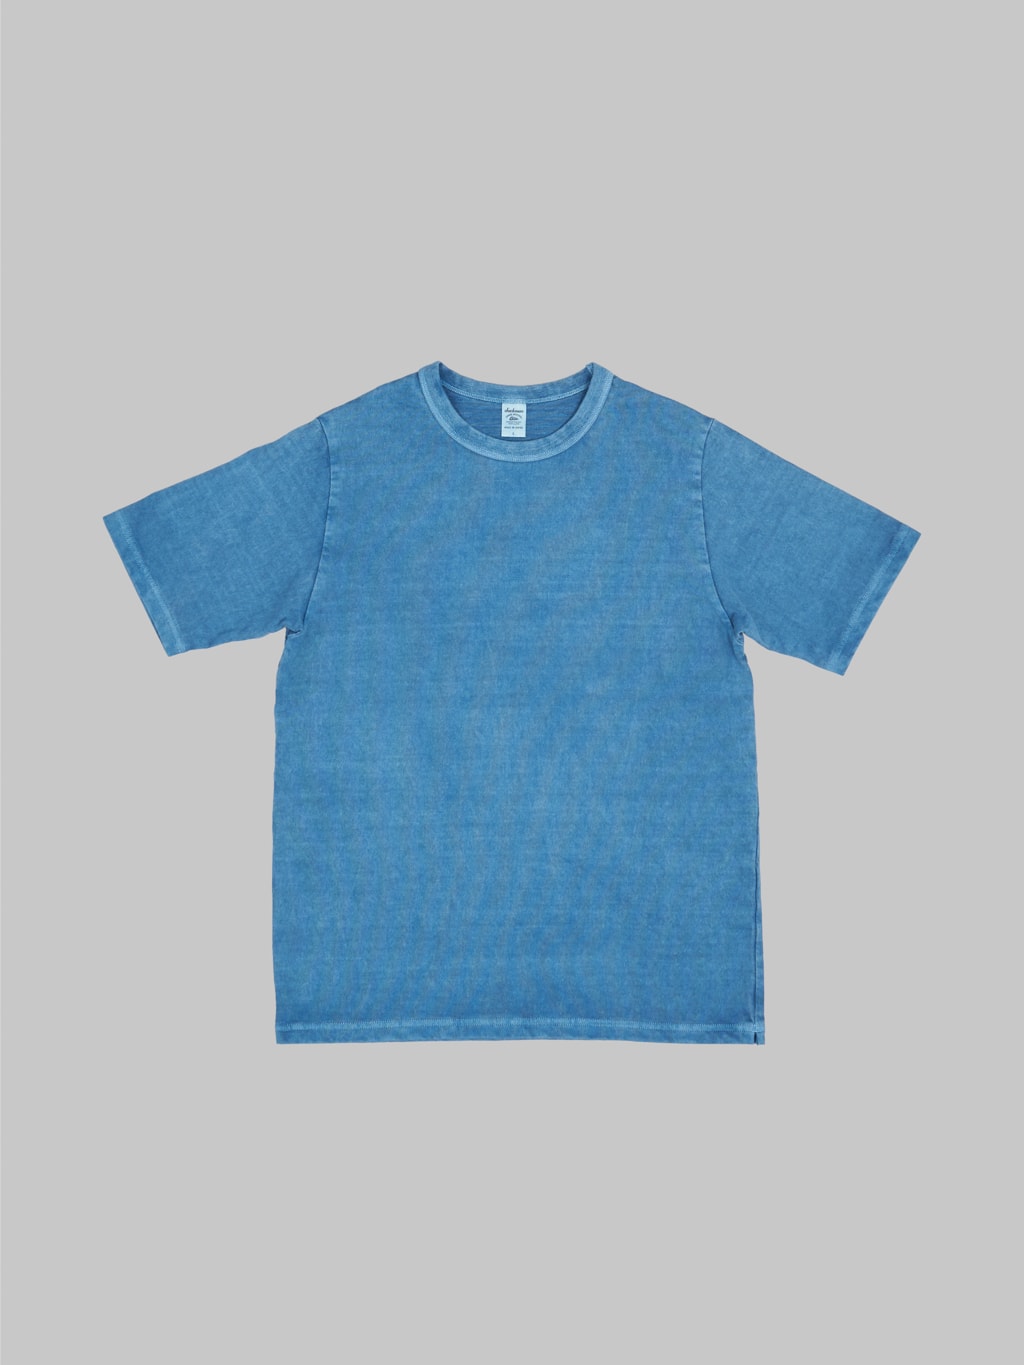 Jackman Lead-Off T-Shirt Fade Blue